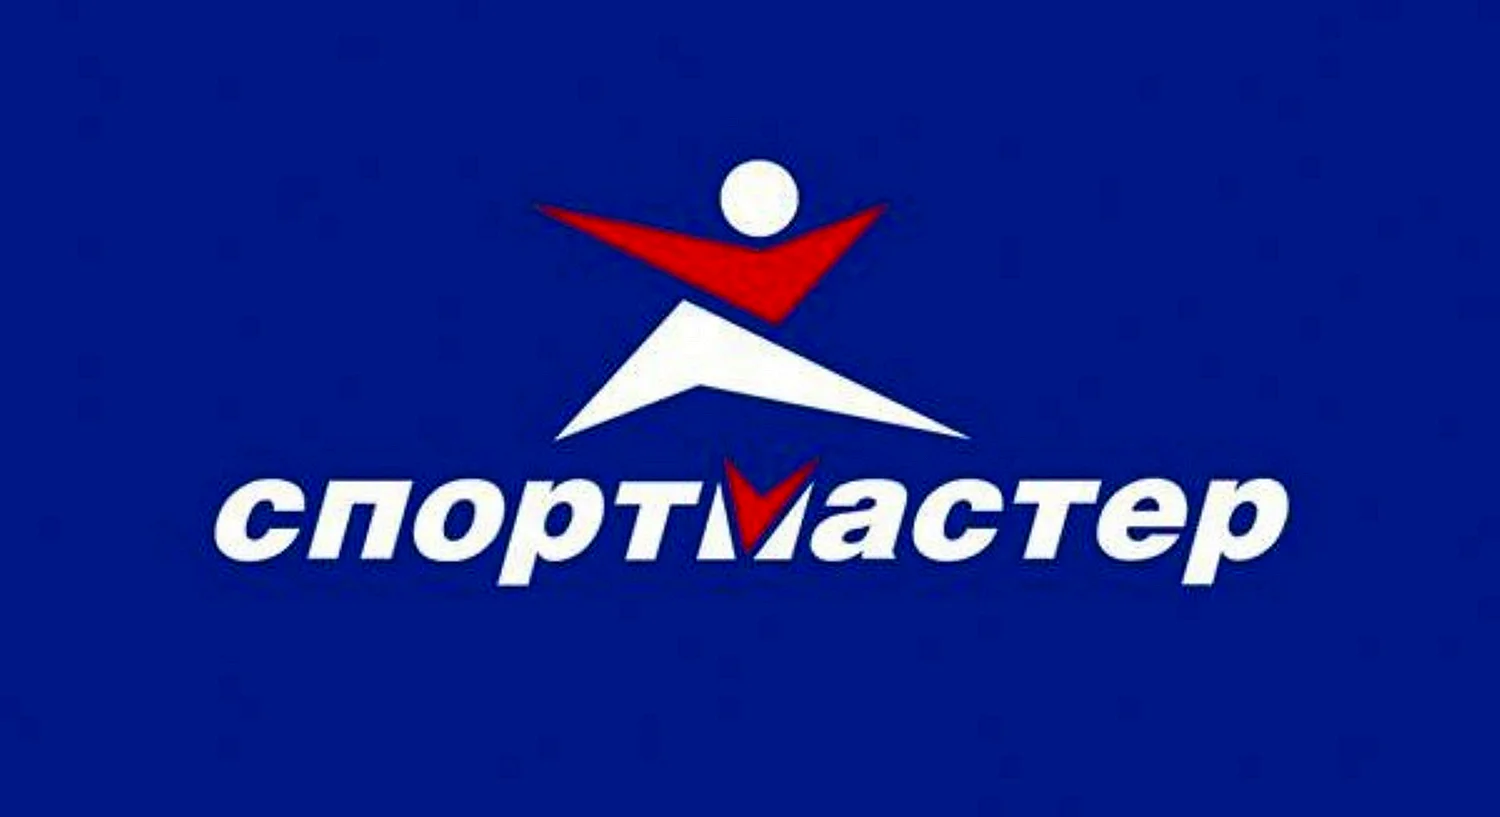 Логотип спортмастер (32 лучших фото)